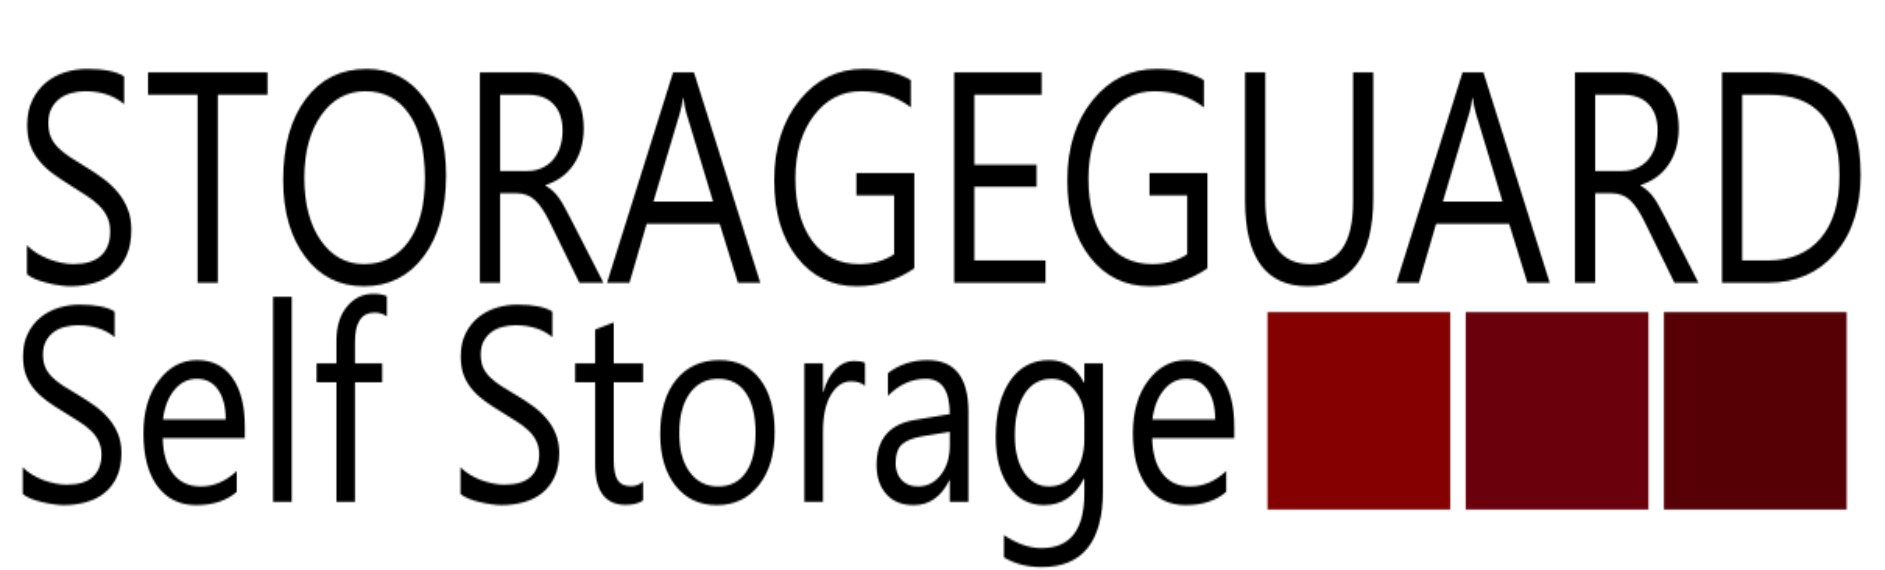 Storageguard Self Storage.